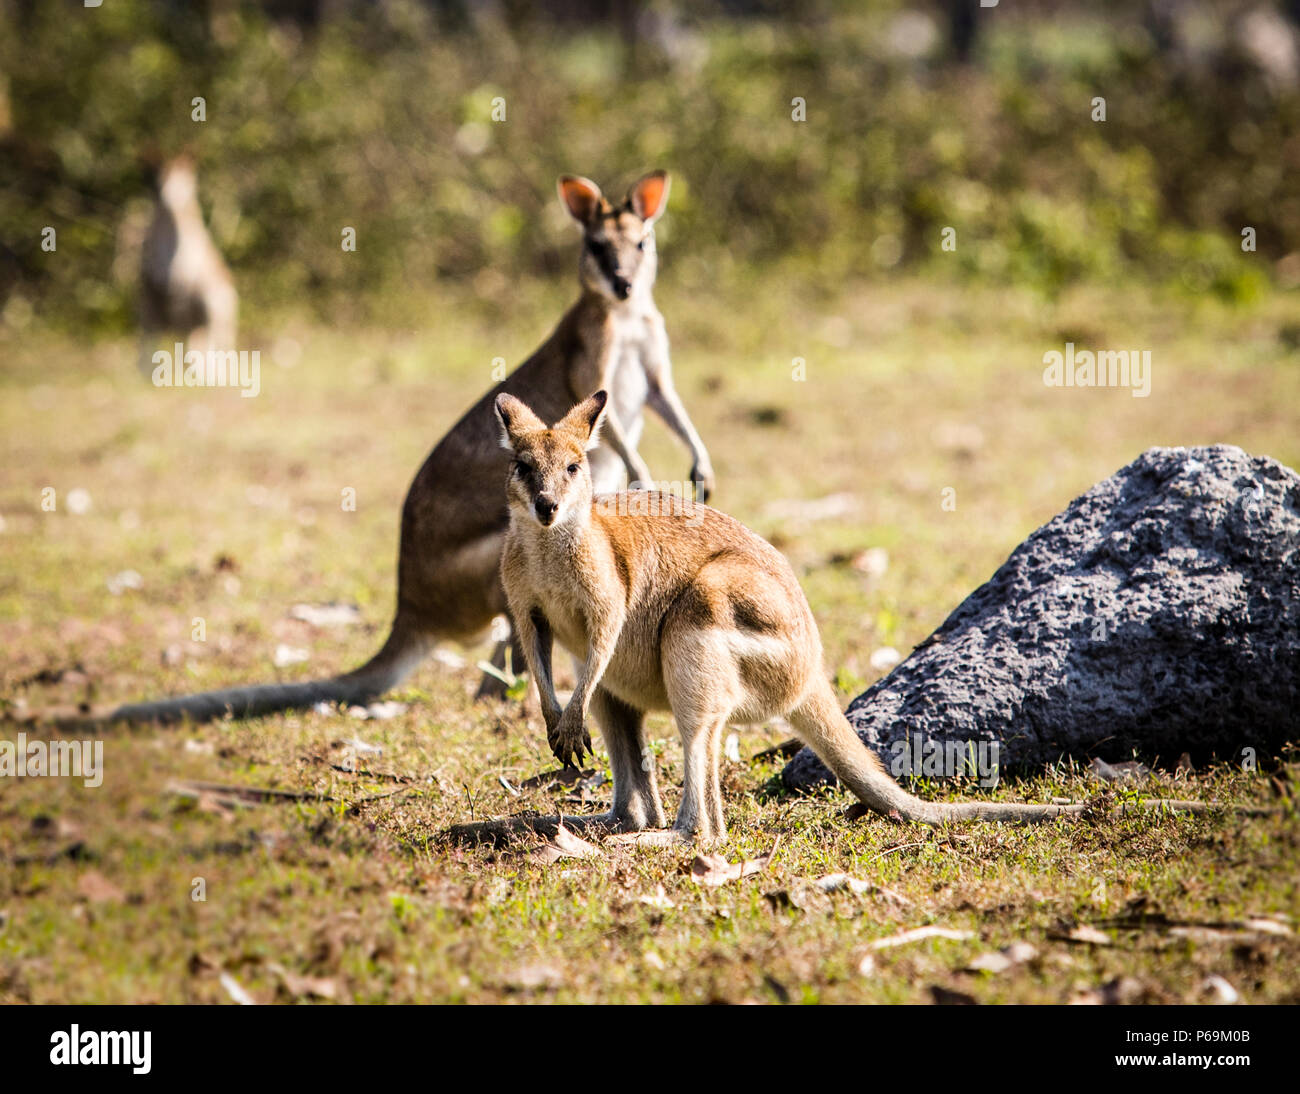 Kangaroo of Northern Australia Stock Photo